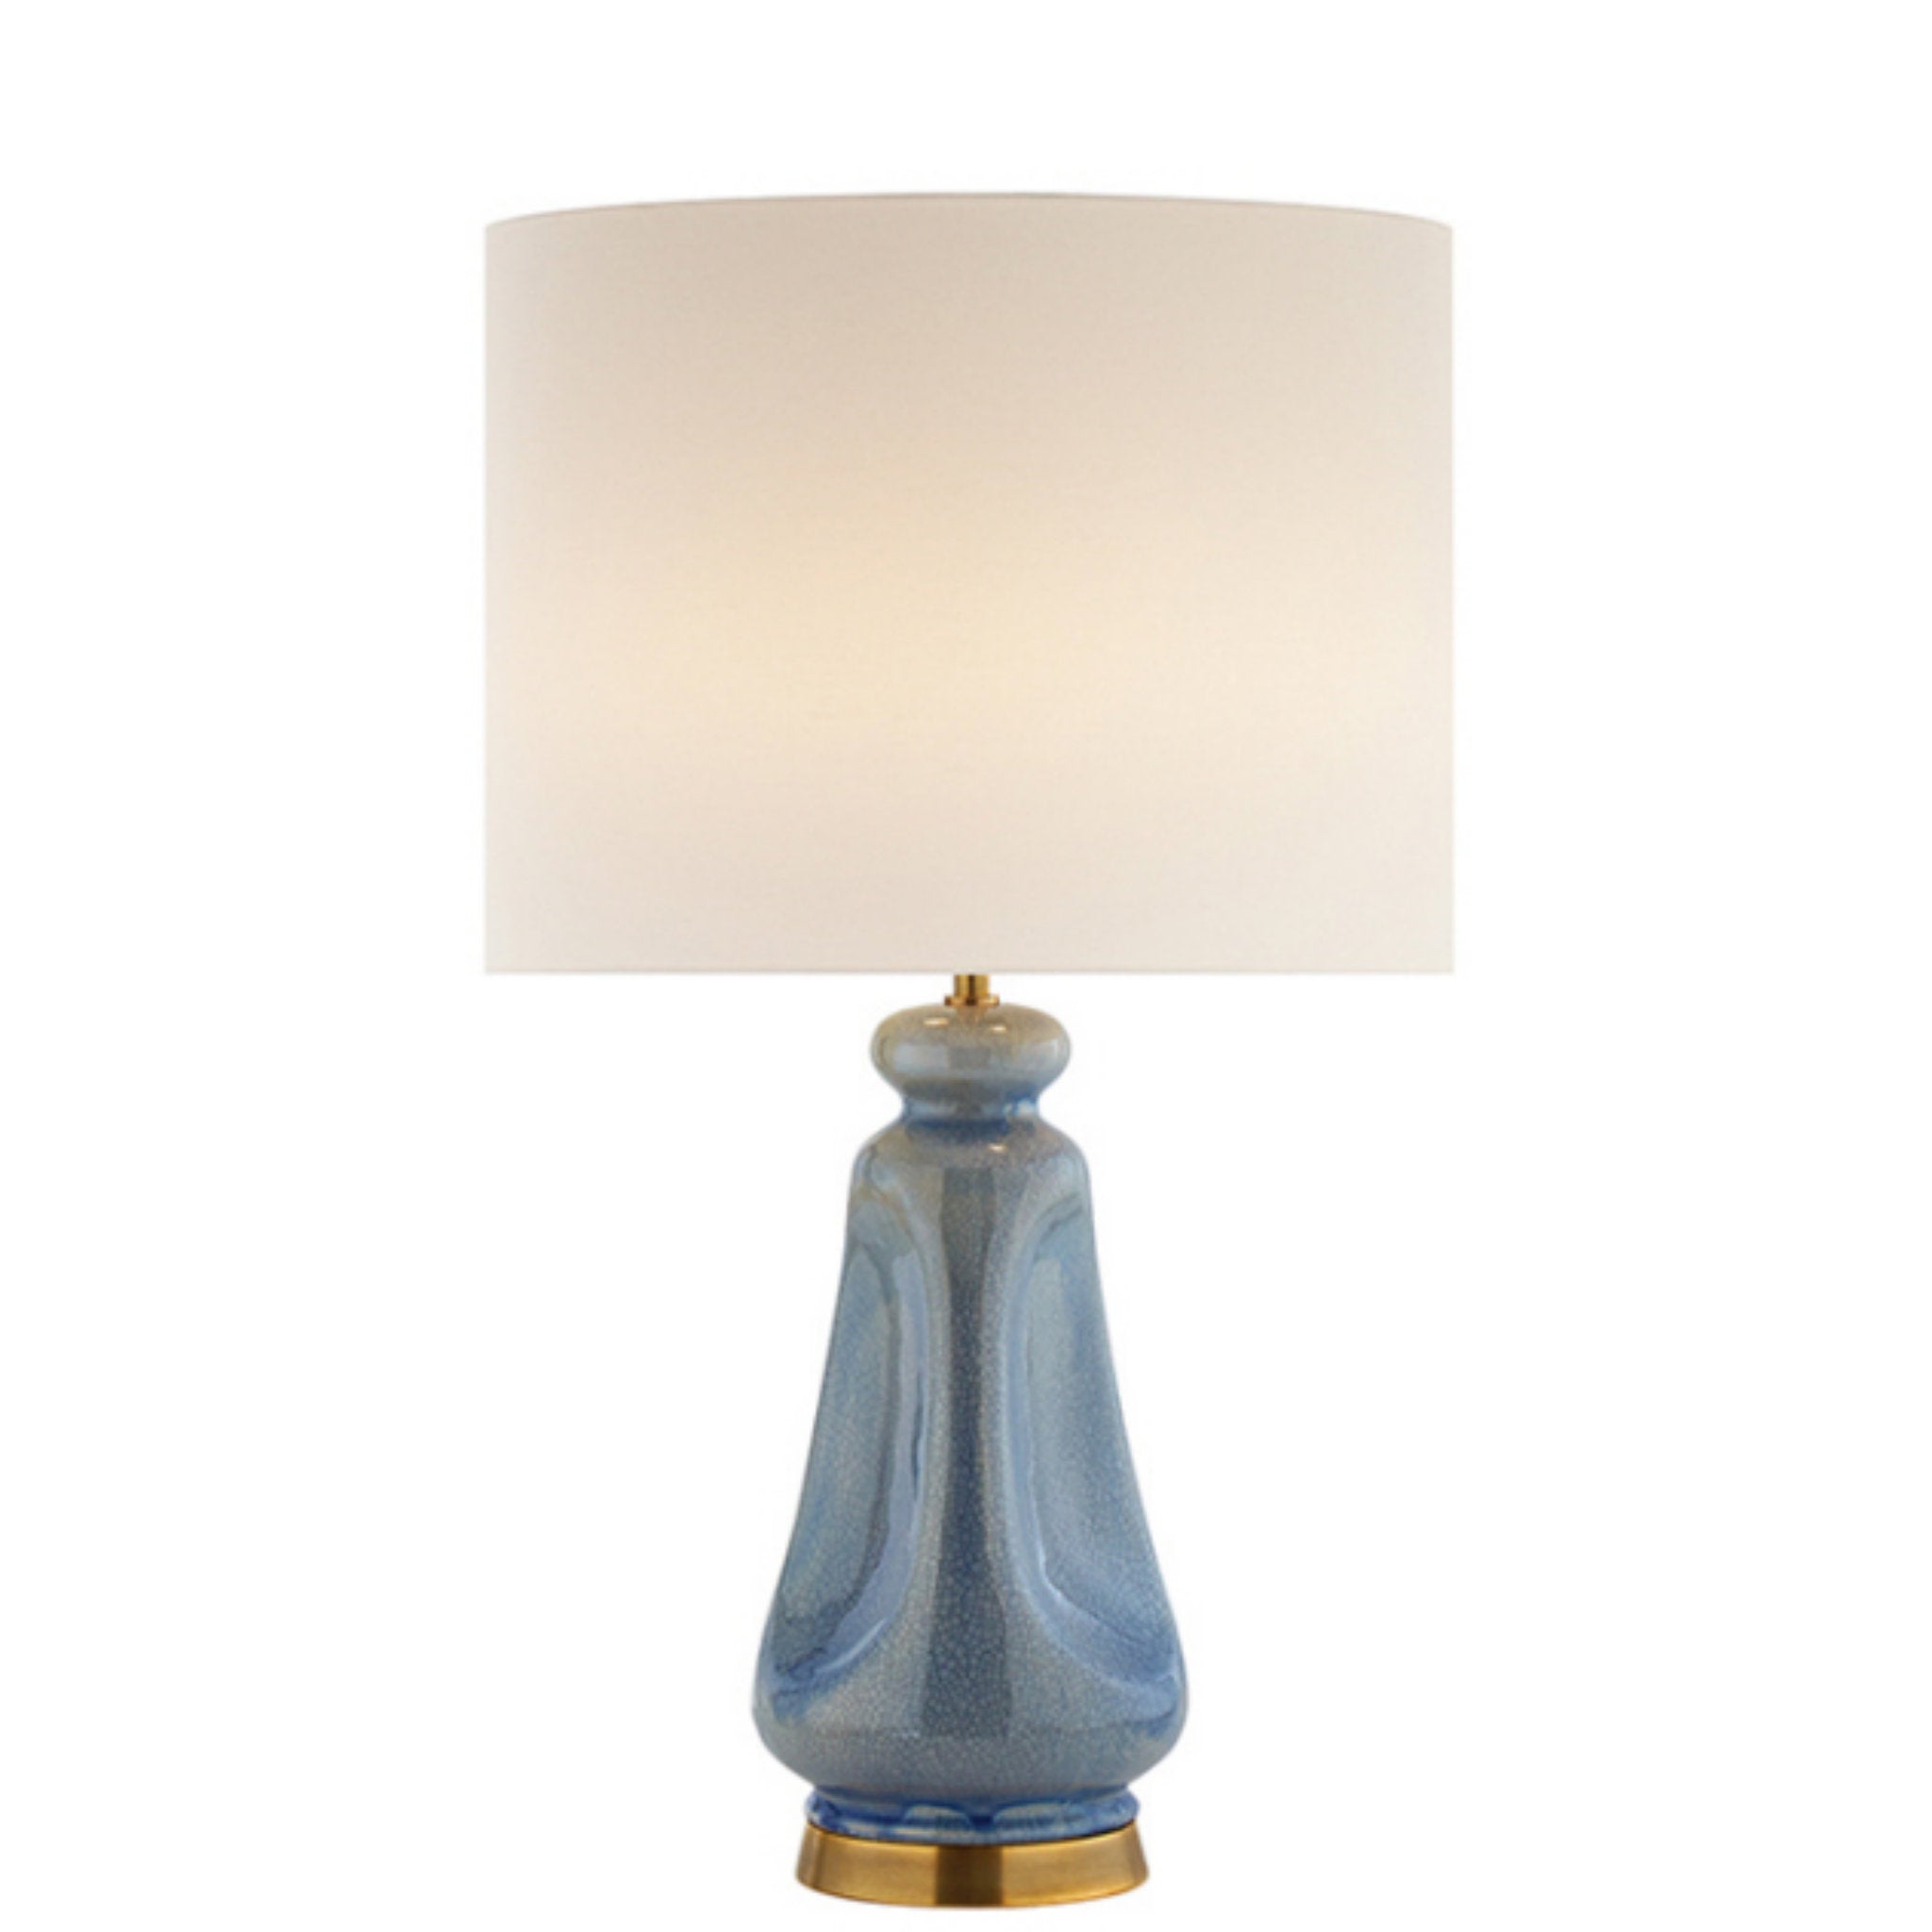 AERIN Kapila Table Lamp in Polar Blue Crackle with Linen Shade